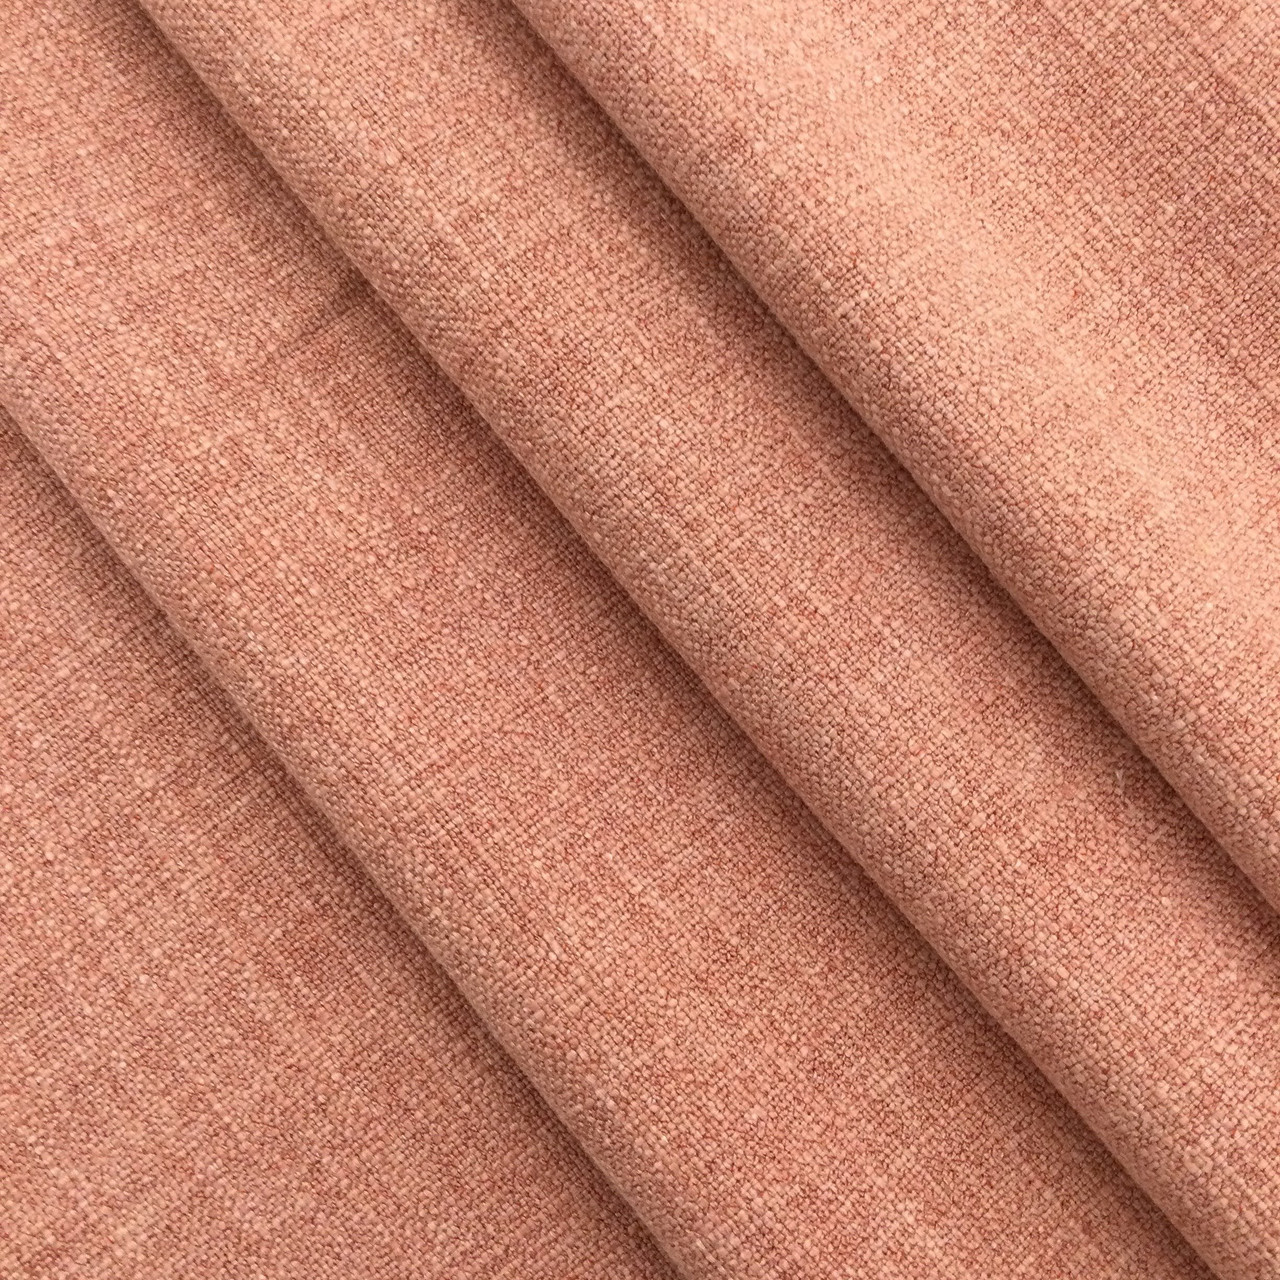 Linen Fabric Slub Weave in Blush Pink